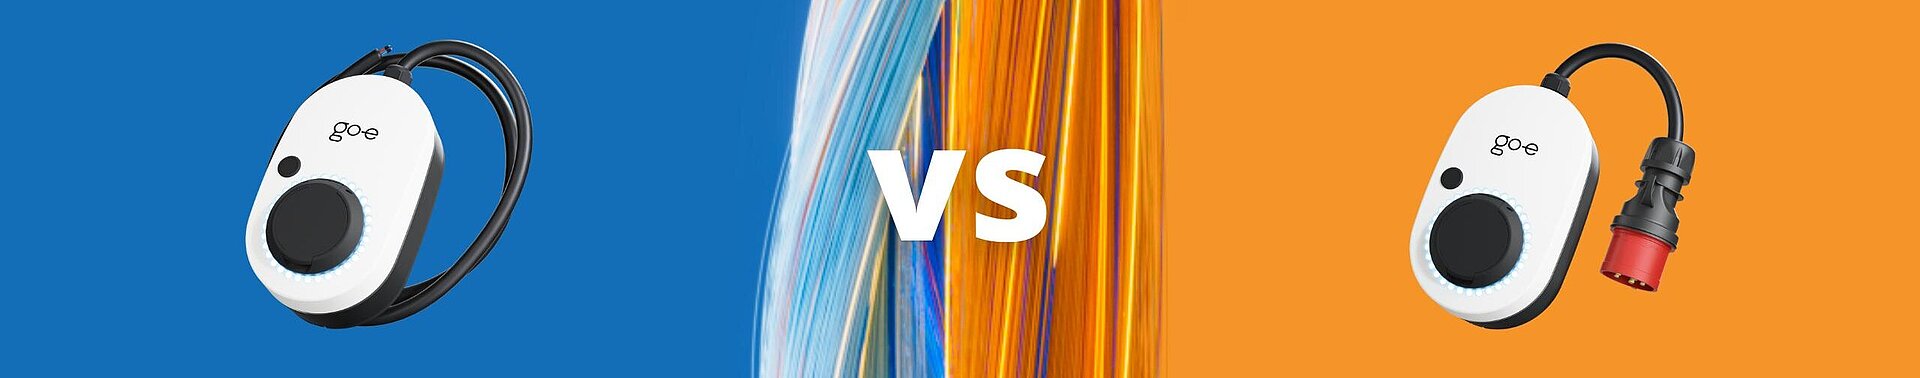 go-e Charger Gemini vs Gemini flex: What's the difference?